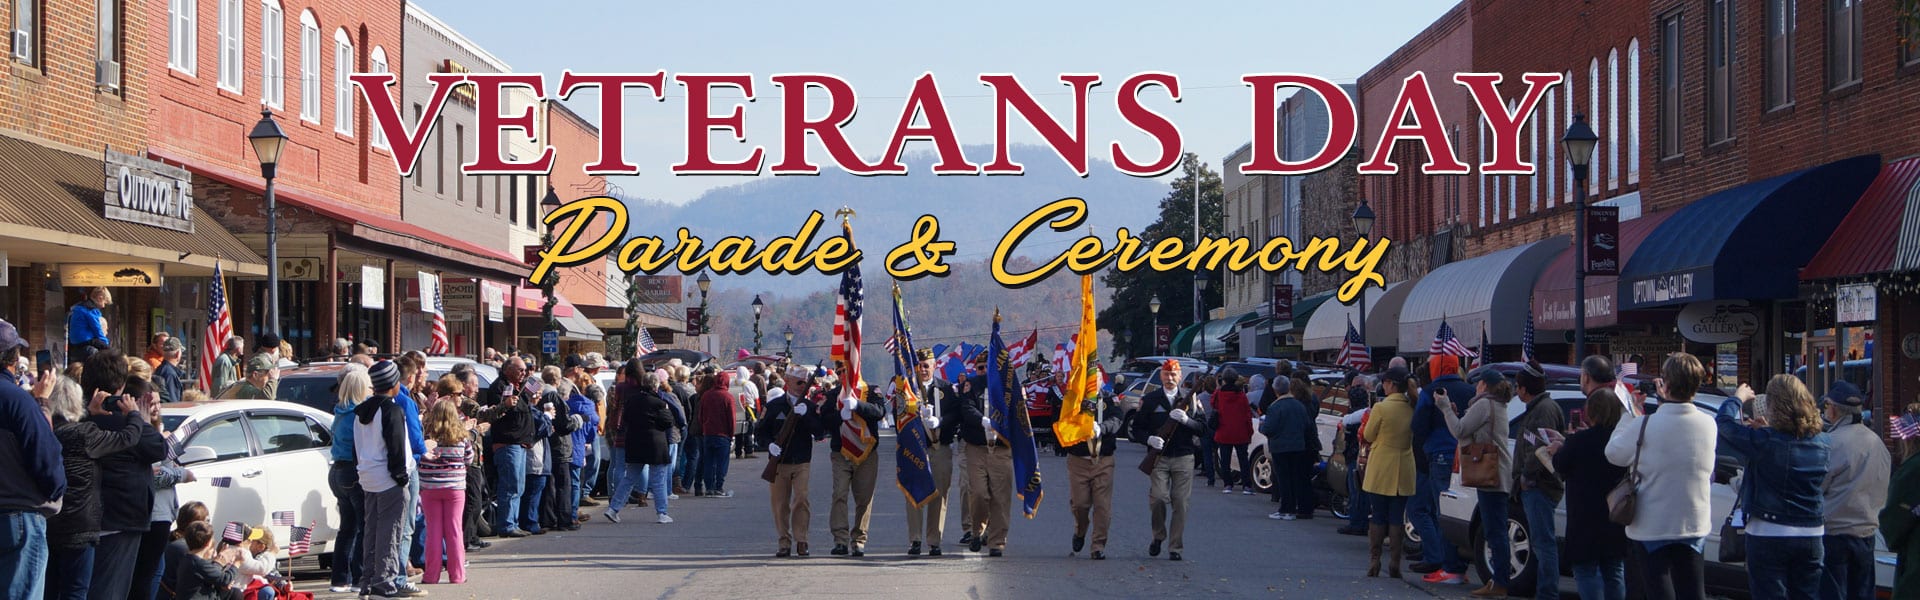 veterans day parade ceremony franklin nc north carolina